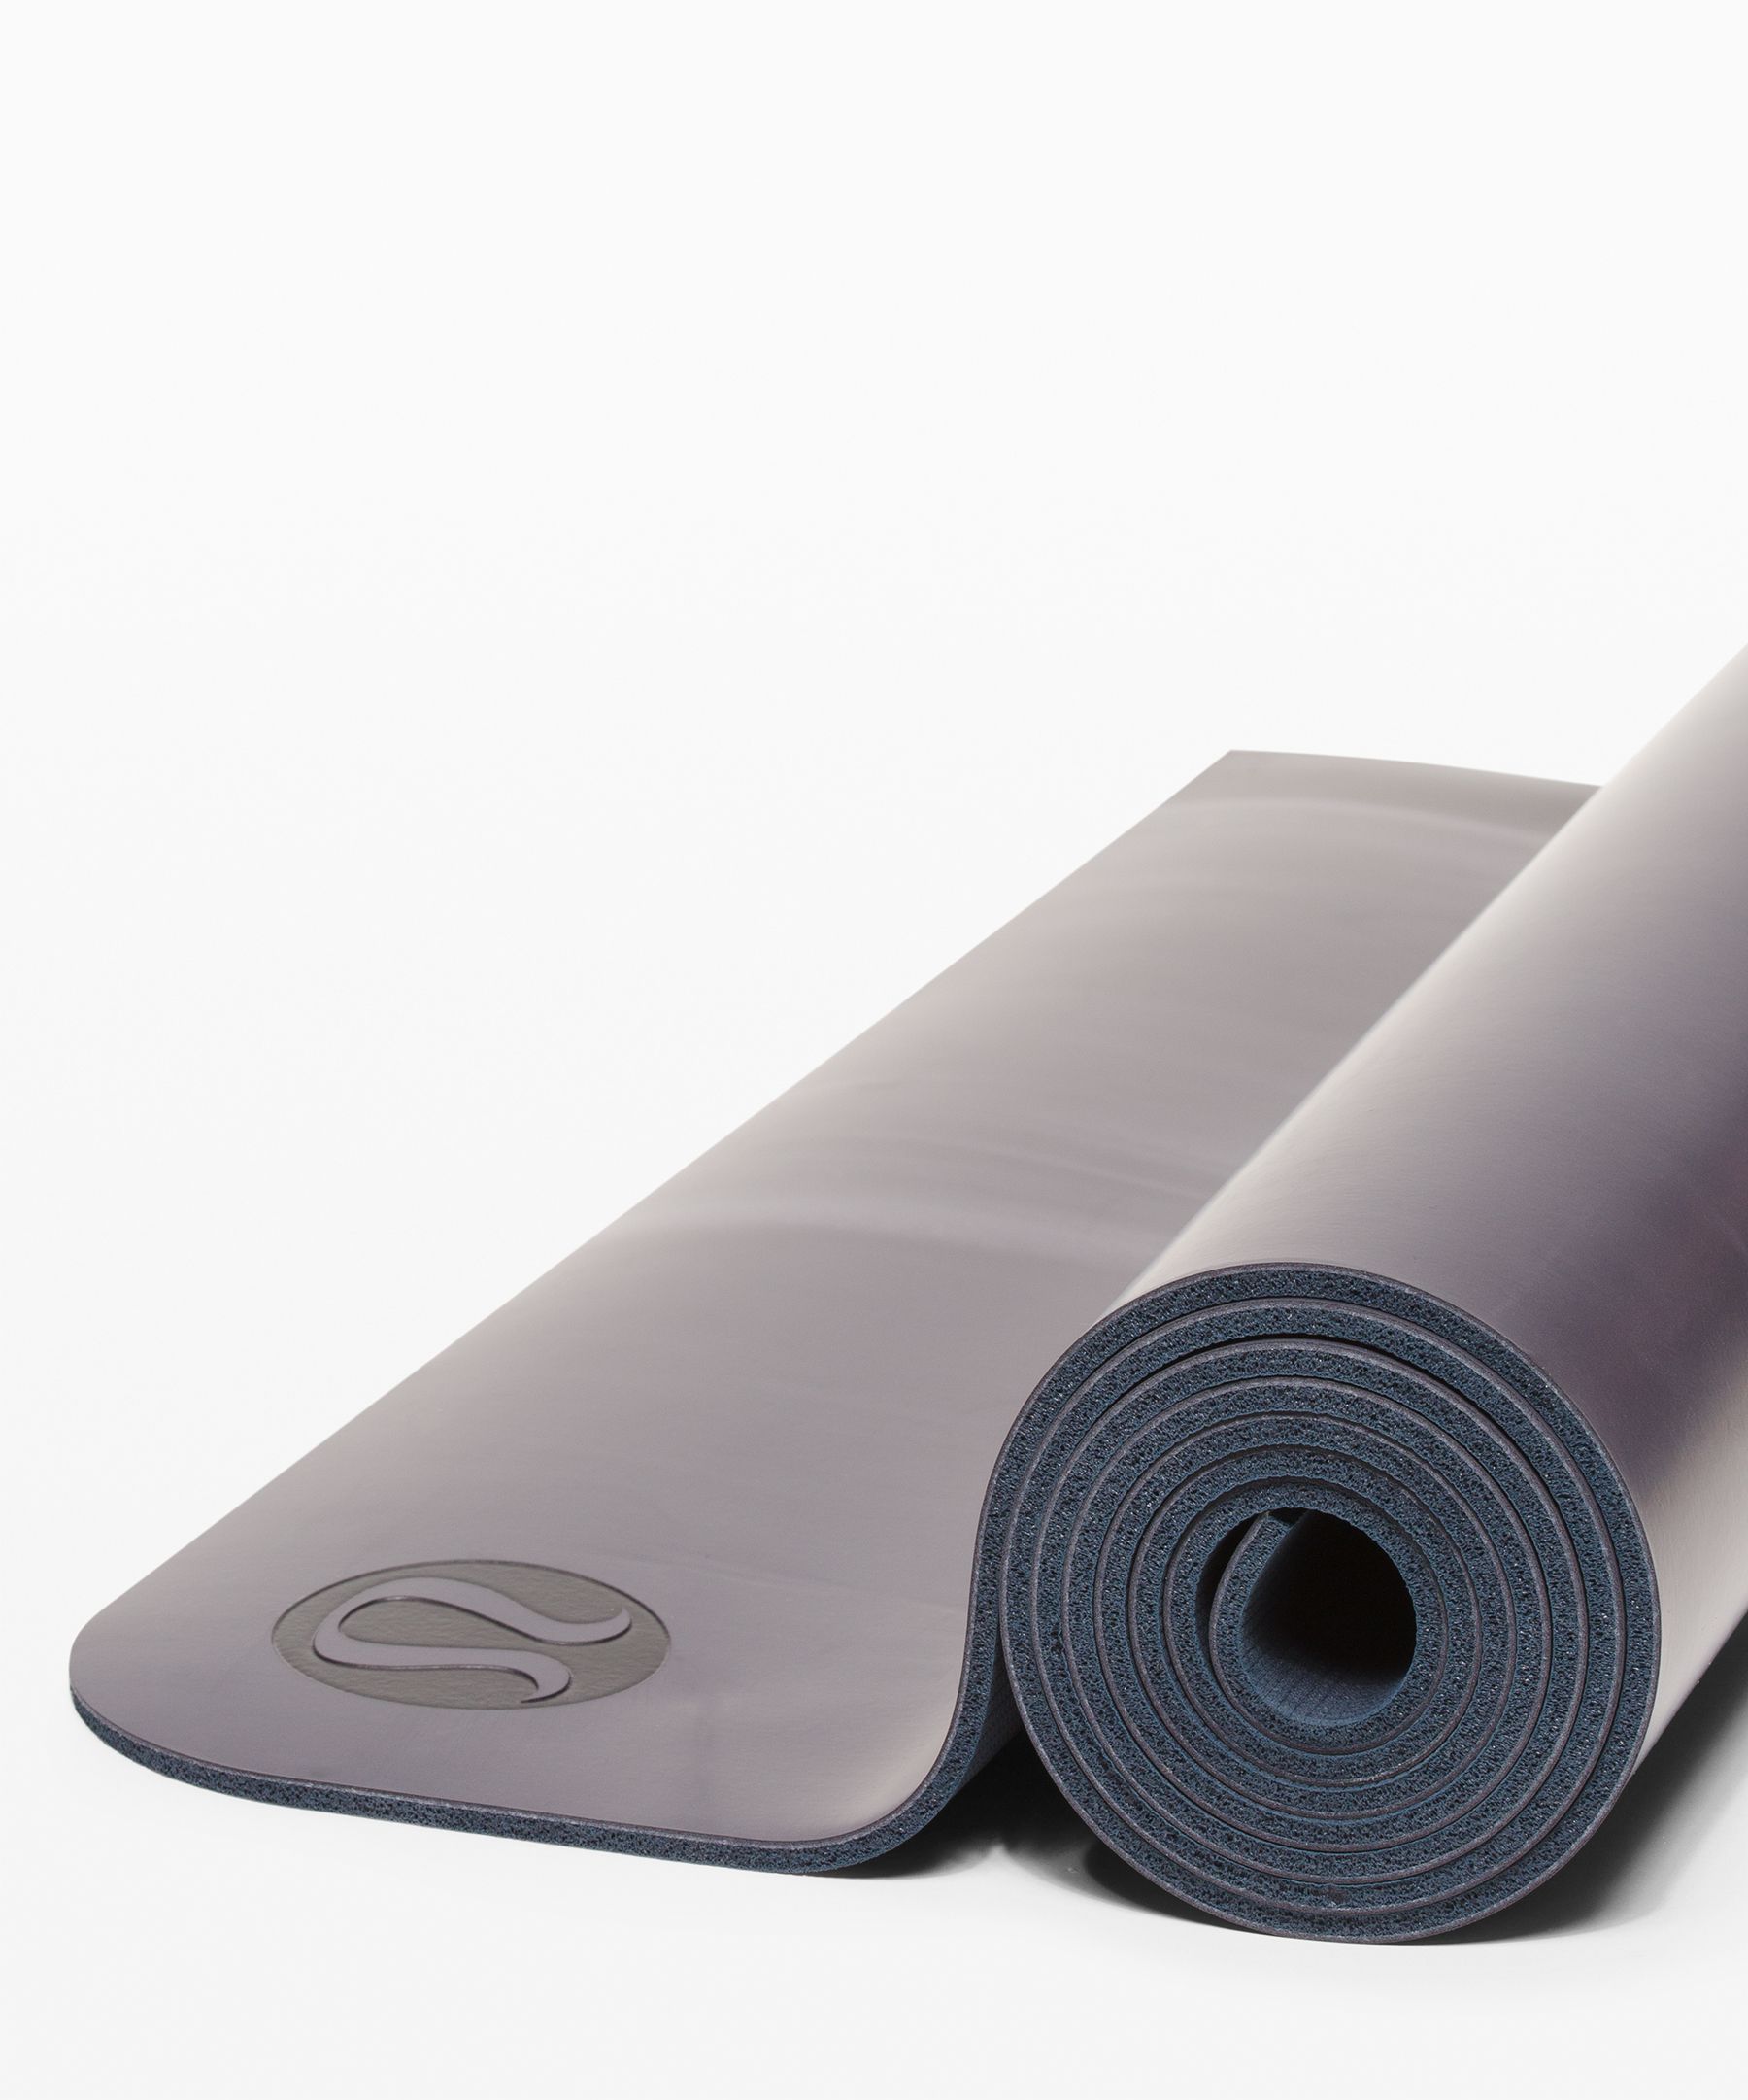 lululemon yoga mat for hot yoga